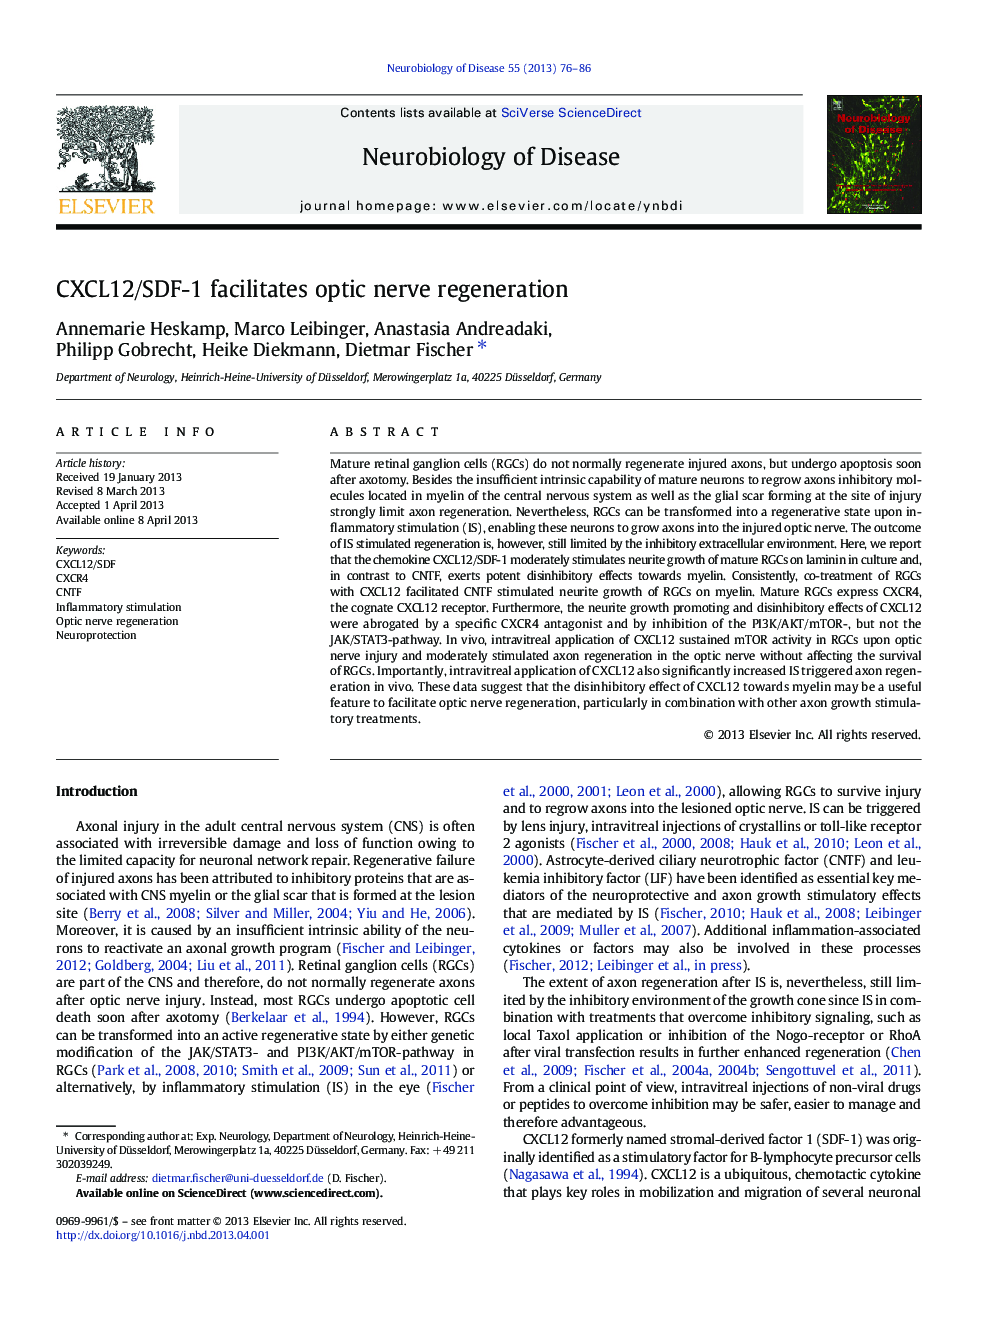 CXCL12/SDF-1 facilitates optic nerve regeneration